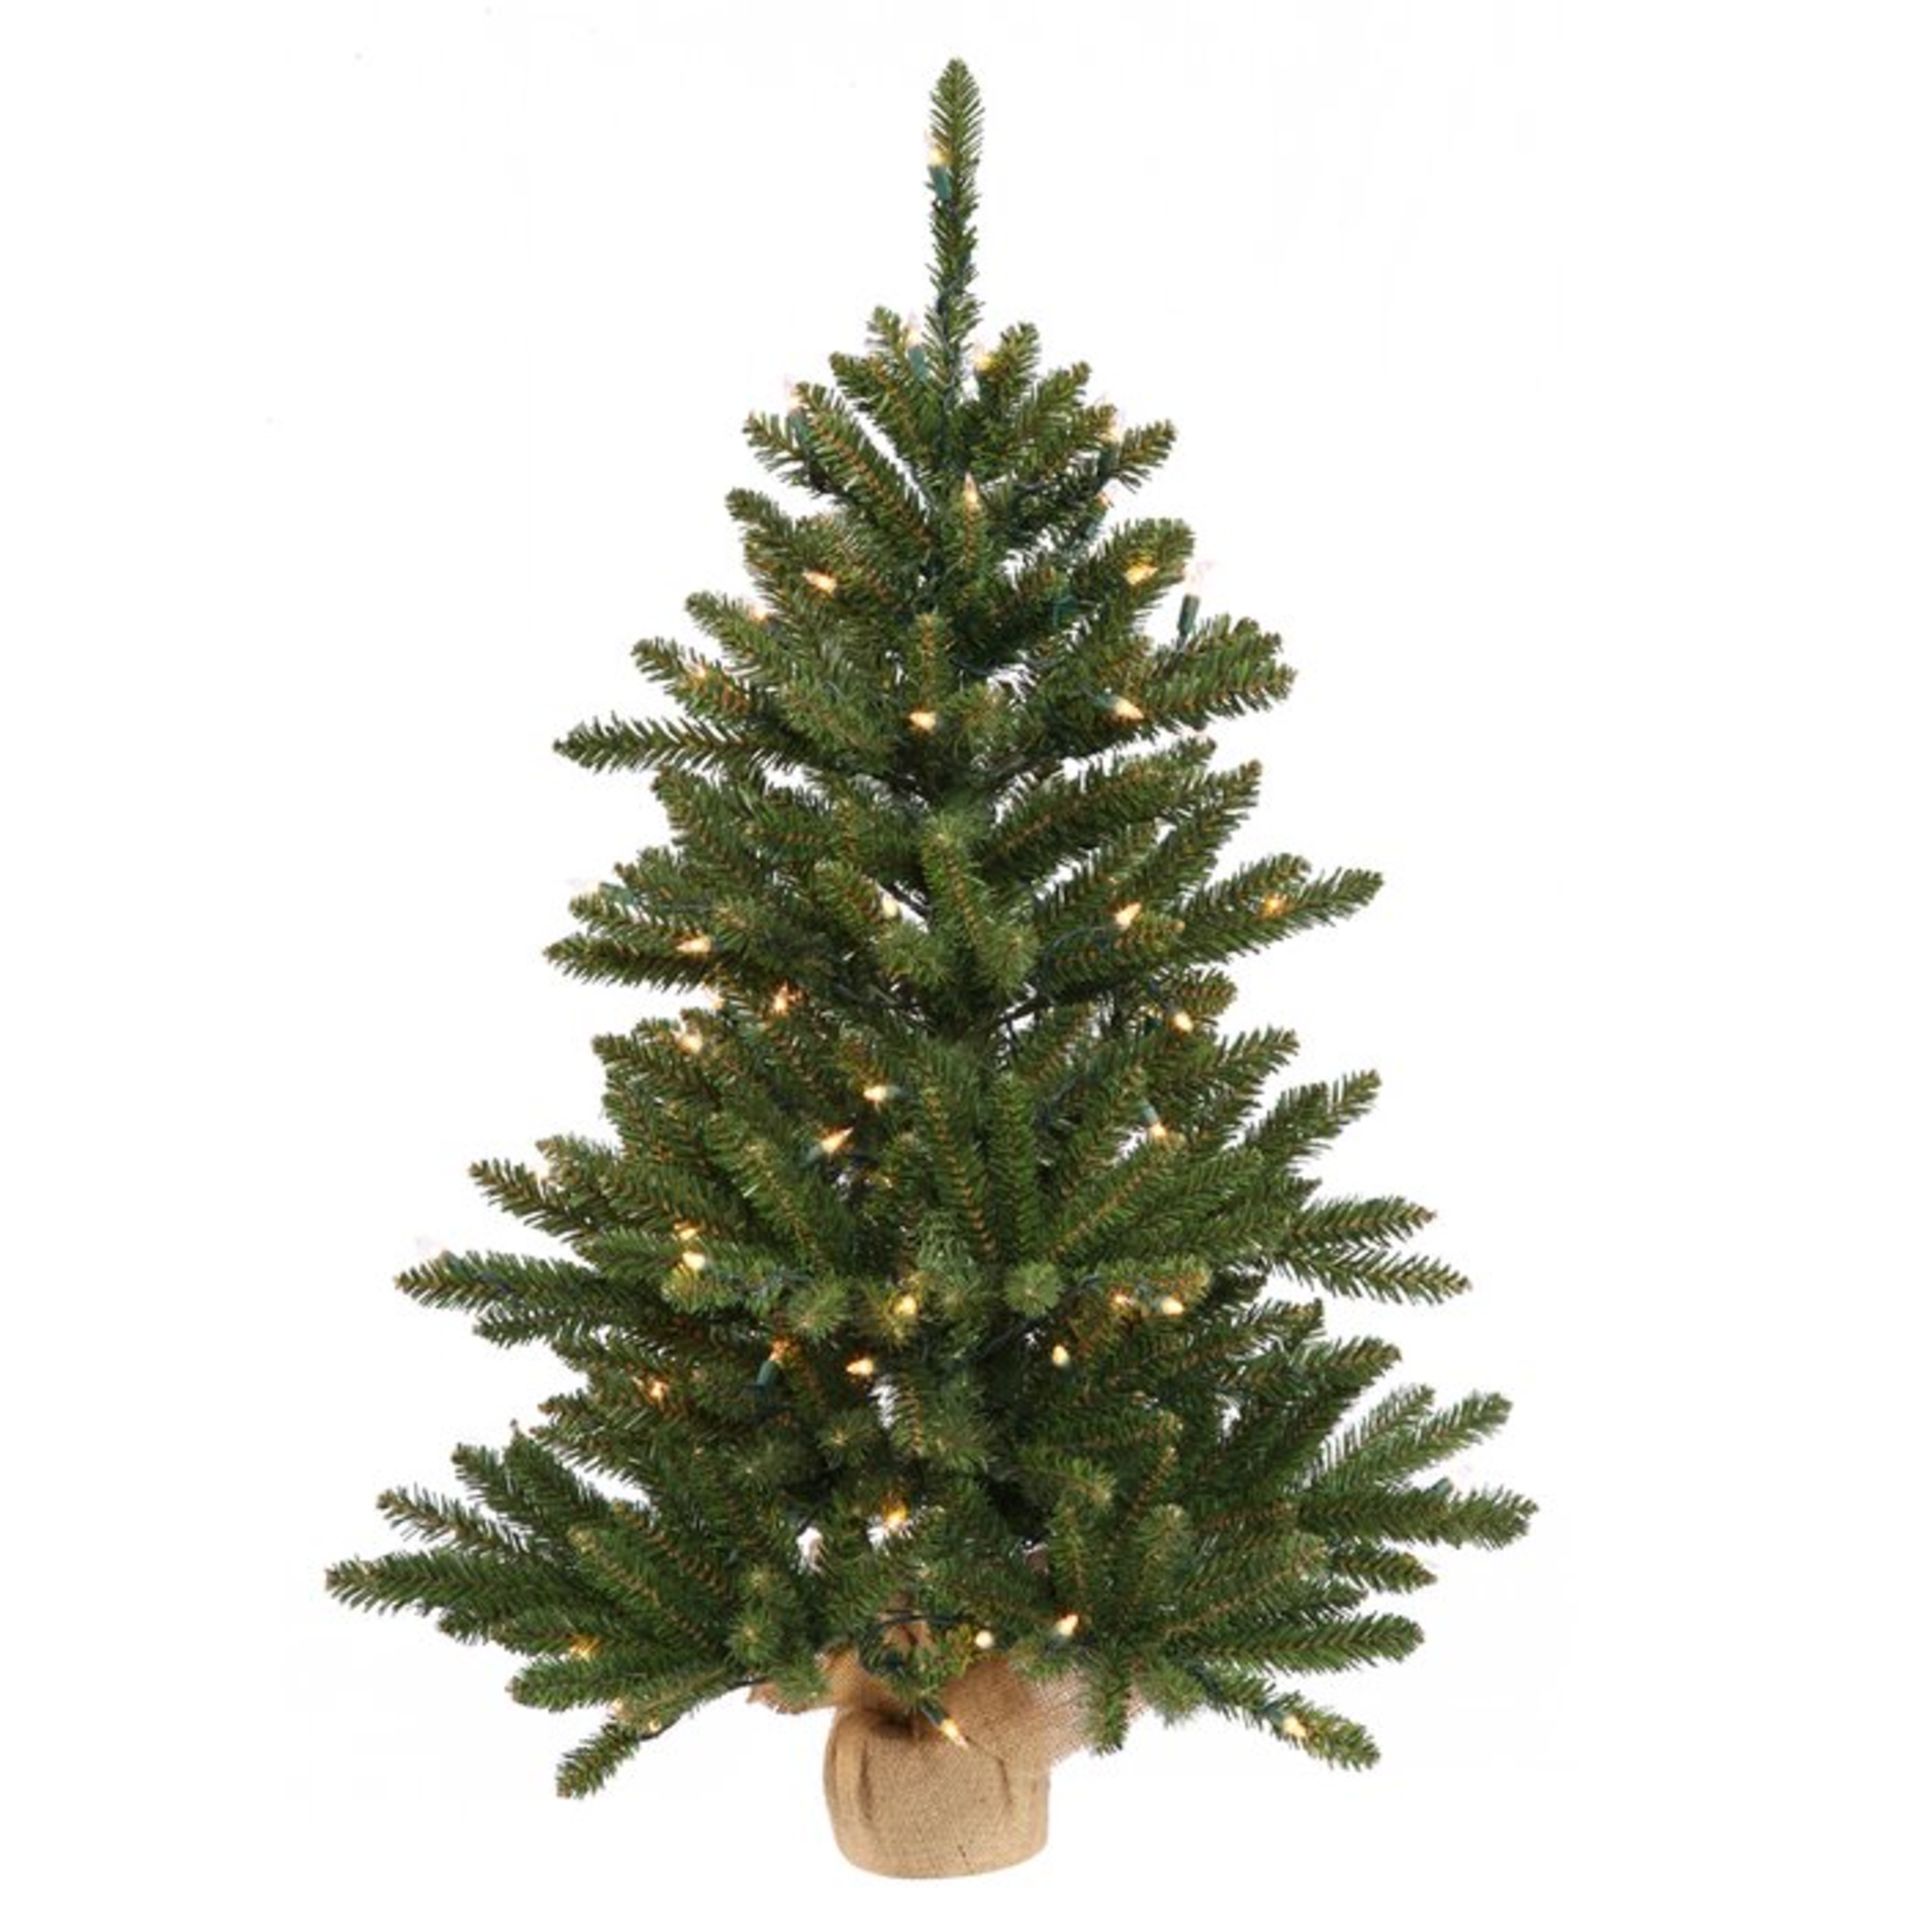 Anoka 2ft Green Pine Artificial Christmas Tree with 35 Lights - RRP £36.91